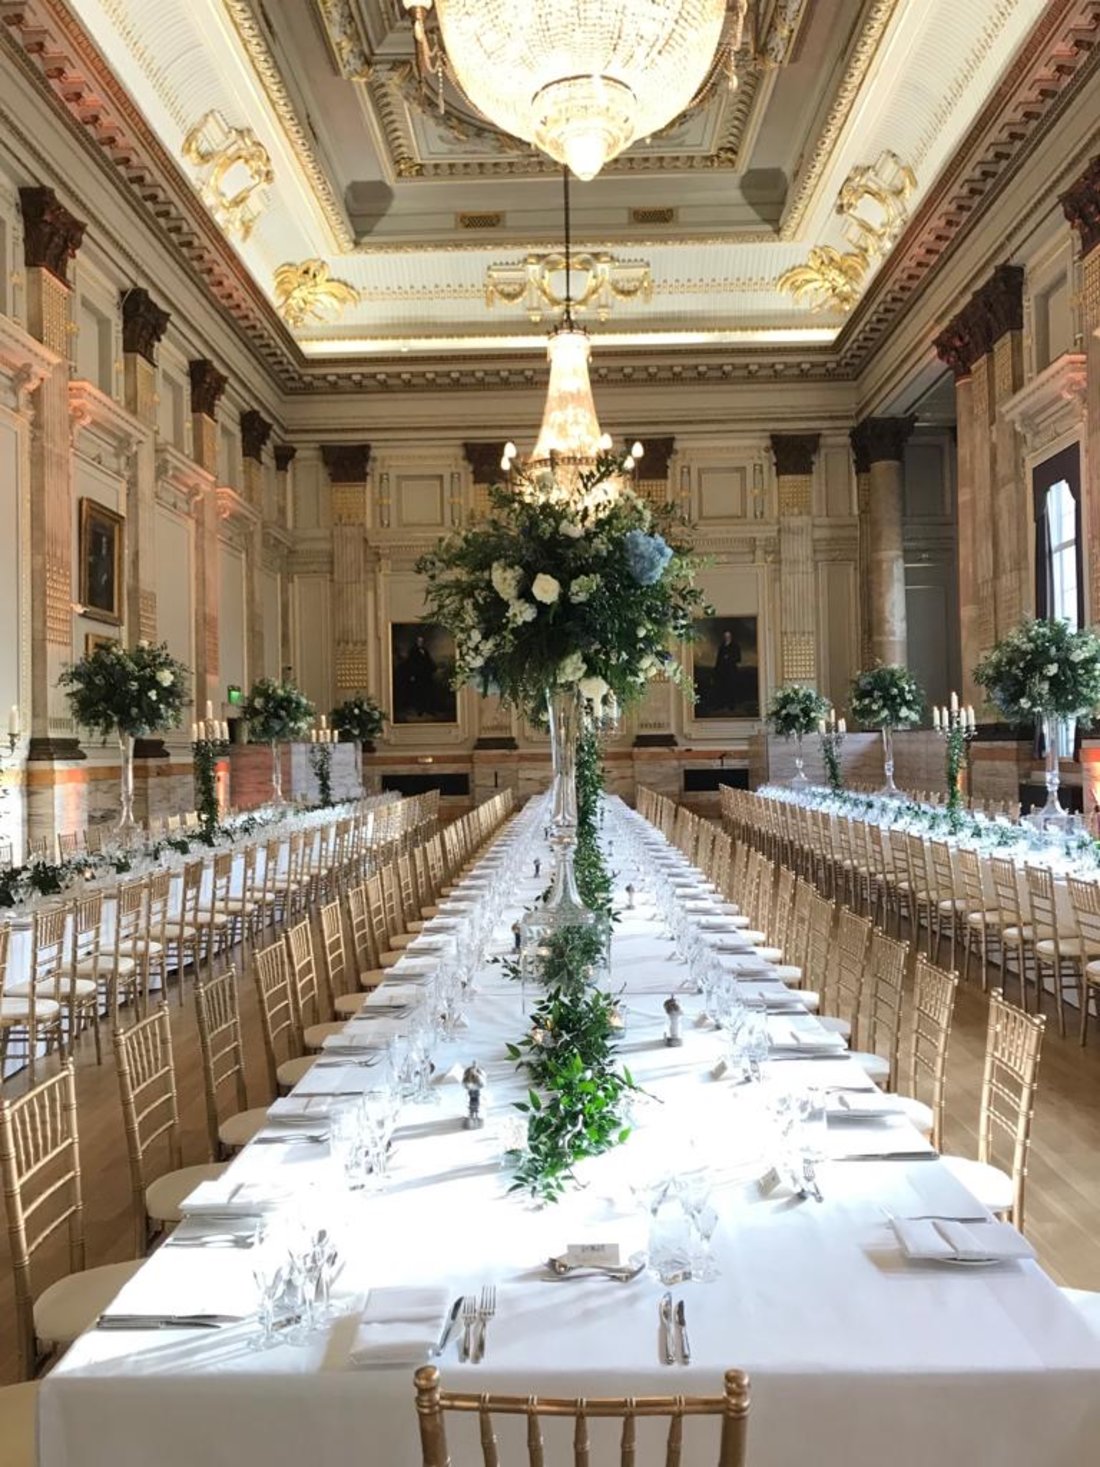 OGGS-venue-wedding-banquet-style-fern-vases-flowers